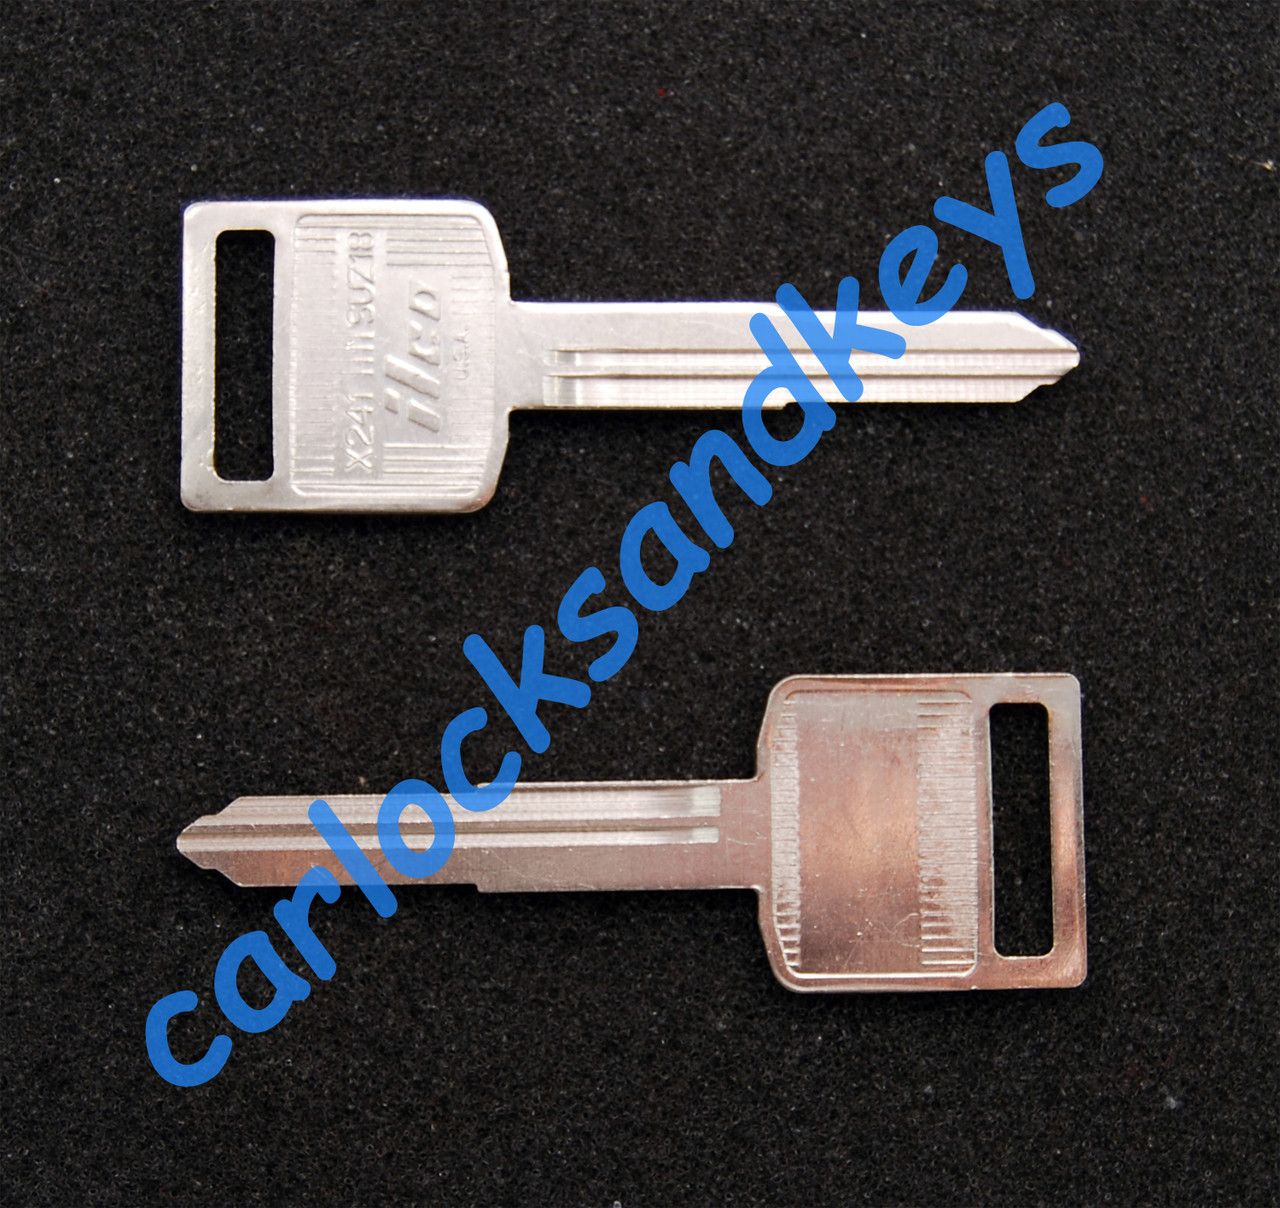 2013, 2015 Suzuki GW250 Key Blanks - Car Locks and Keys